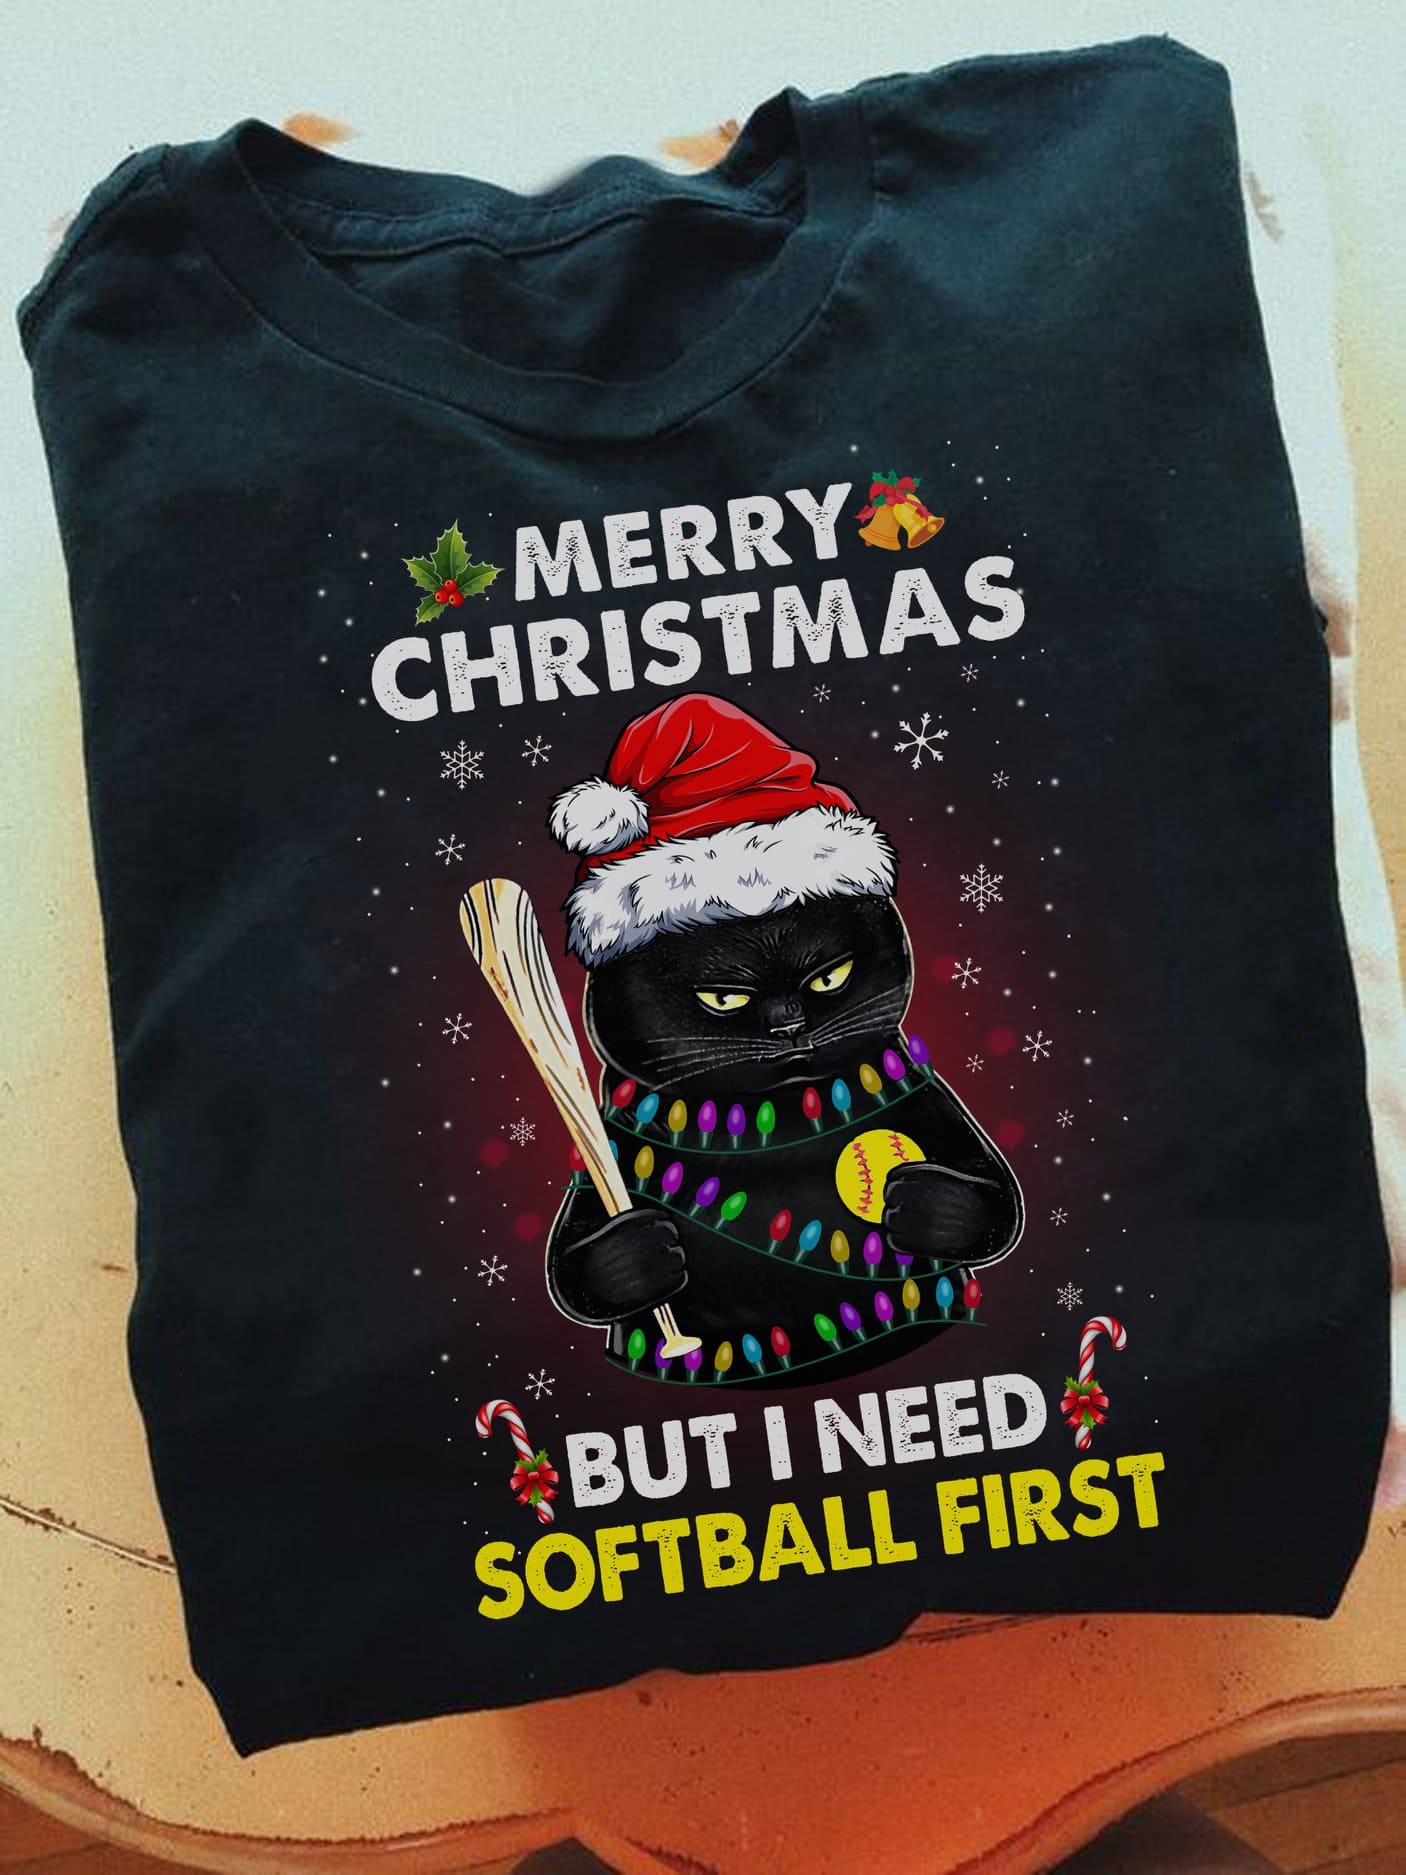 Merry Christmas but I need softball first - Softball player T-shirt, Cat wearing Santa hat